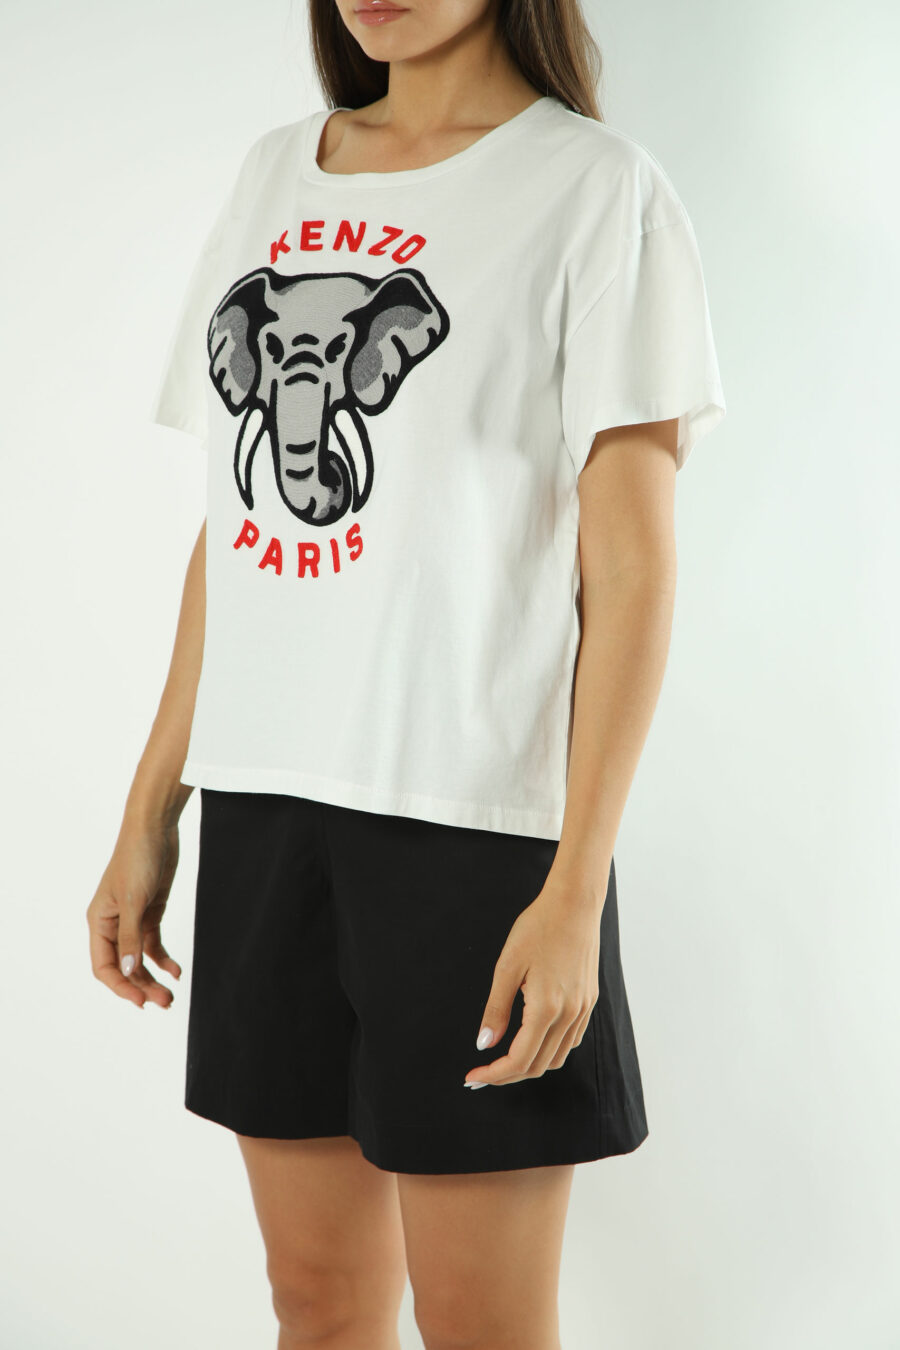 Weißes T-Shirt mit Elefanten-Maxilogo - Fotos 1513